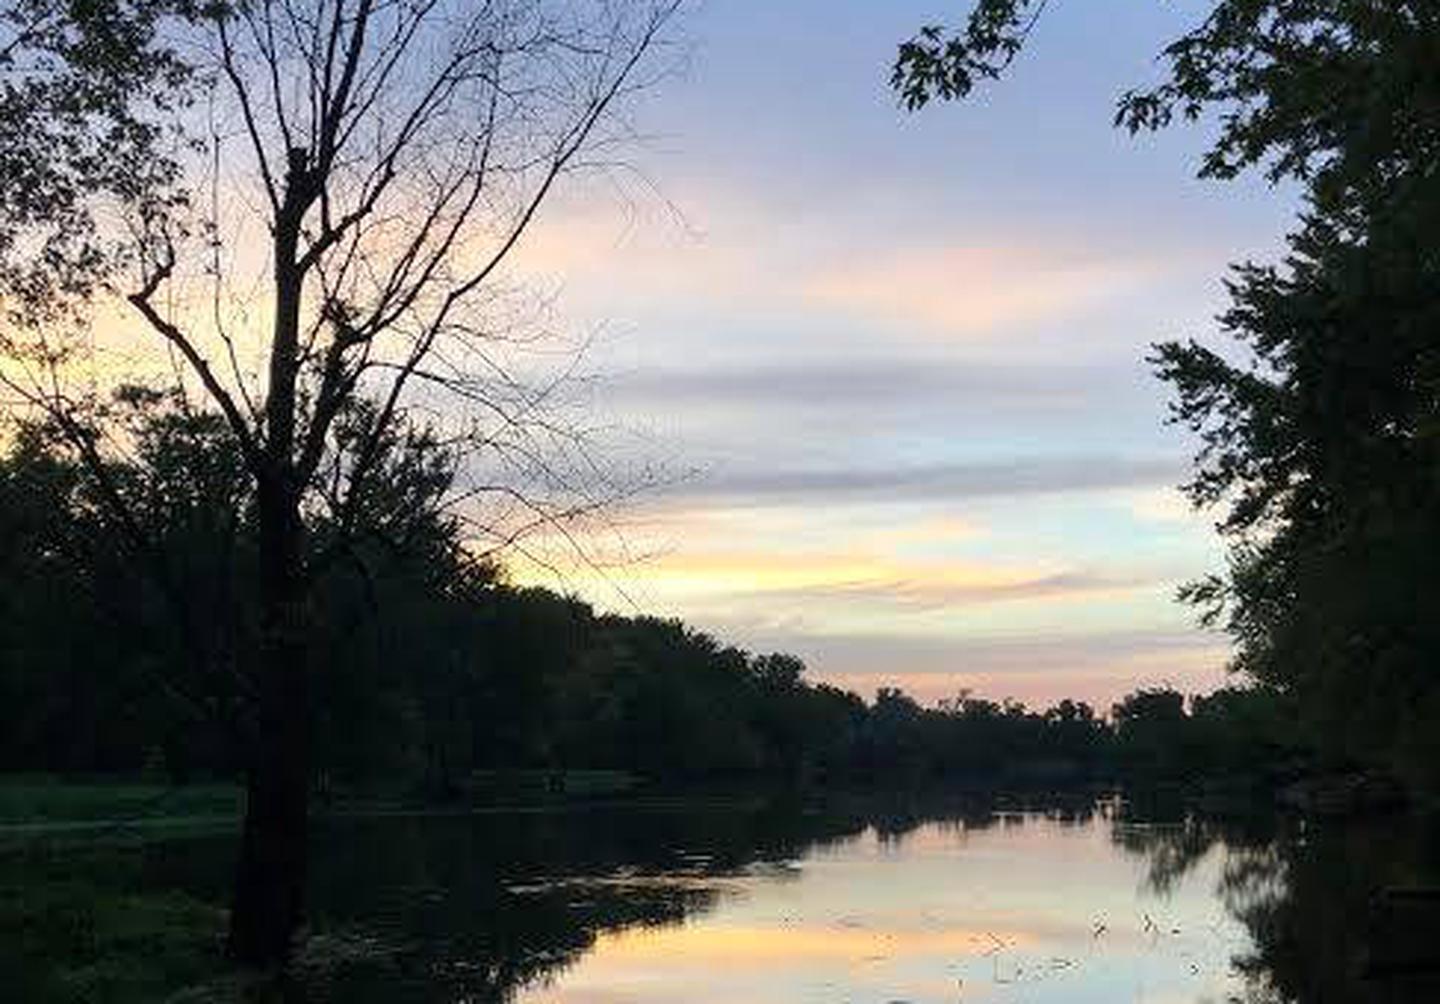 Sunset Sunset along the banks of the Mississippi River at Blackhawk Park